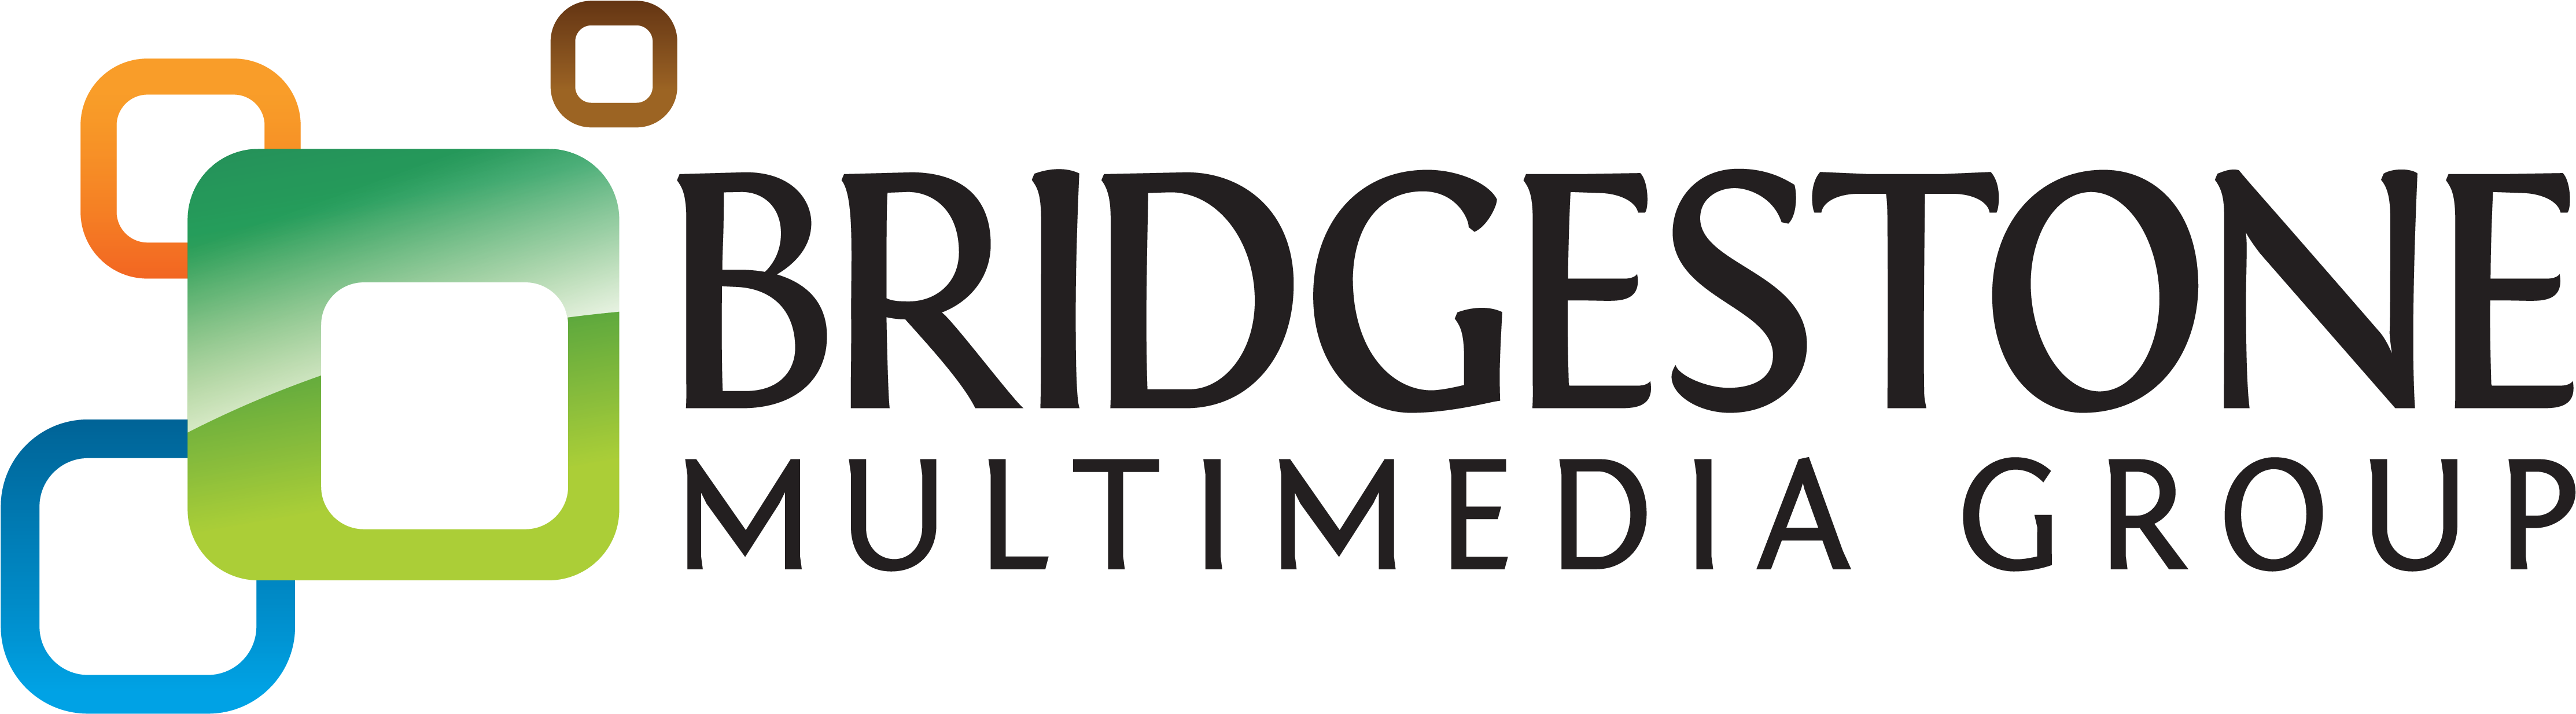 Bridgestone Media Group - Bridgestone Media Group Logo Png (4684x1408), Png Download